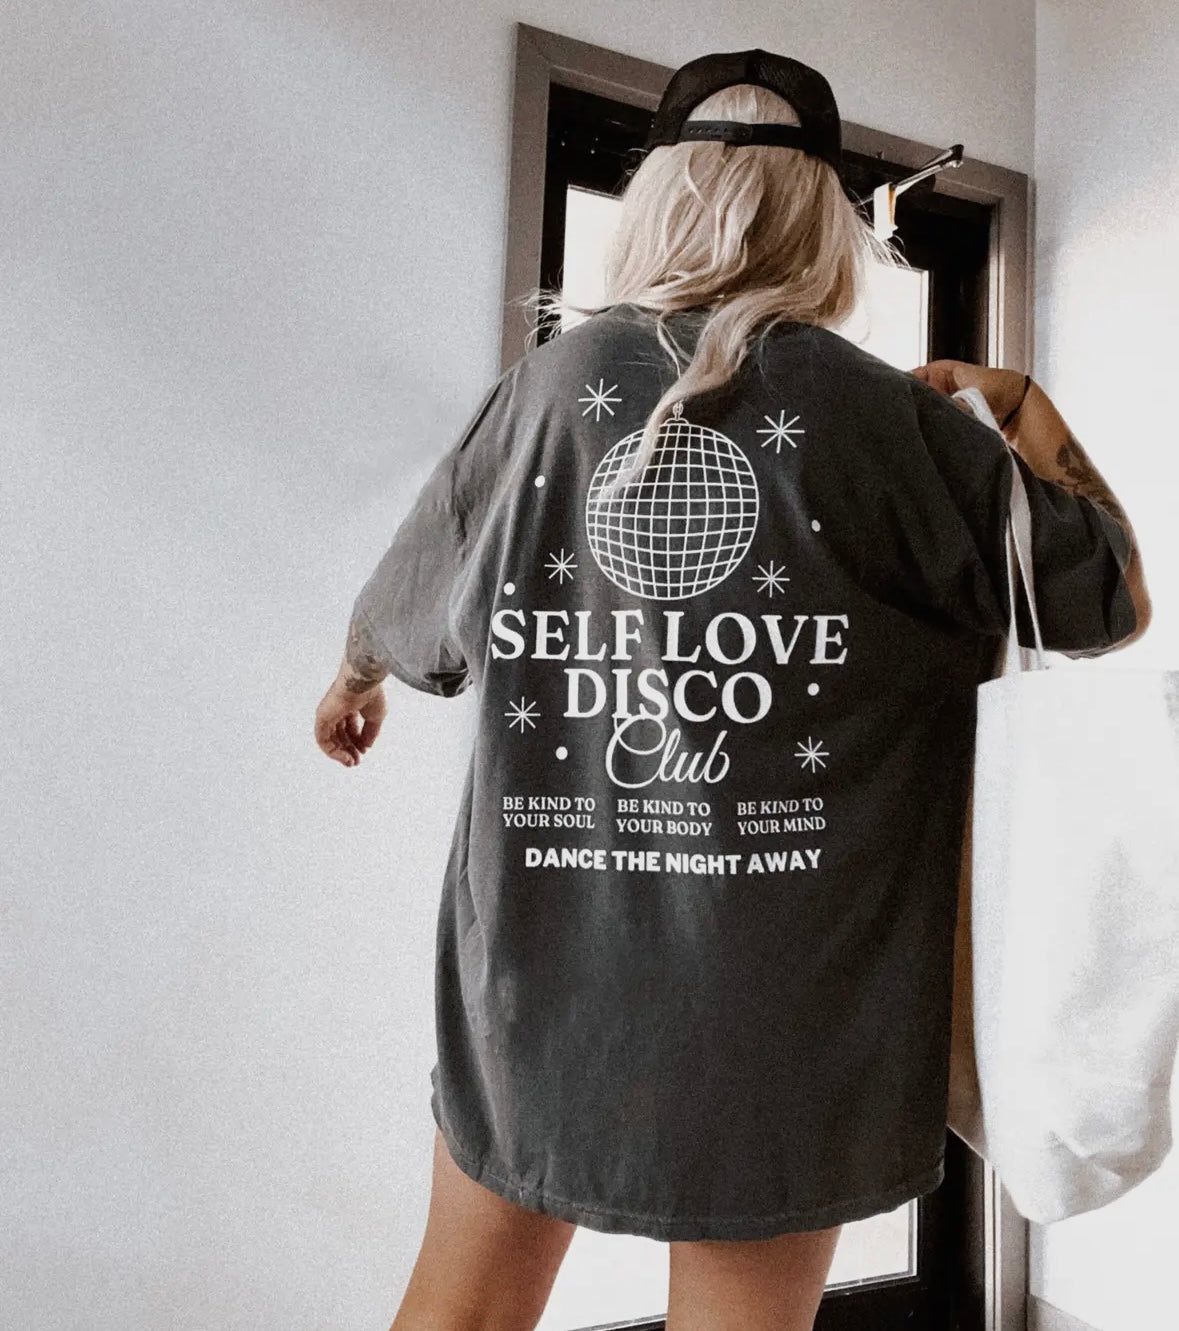 “Self love disco club” tee